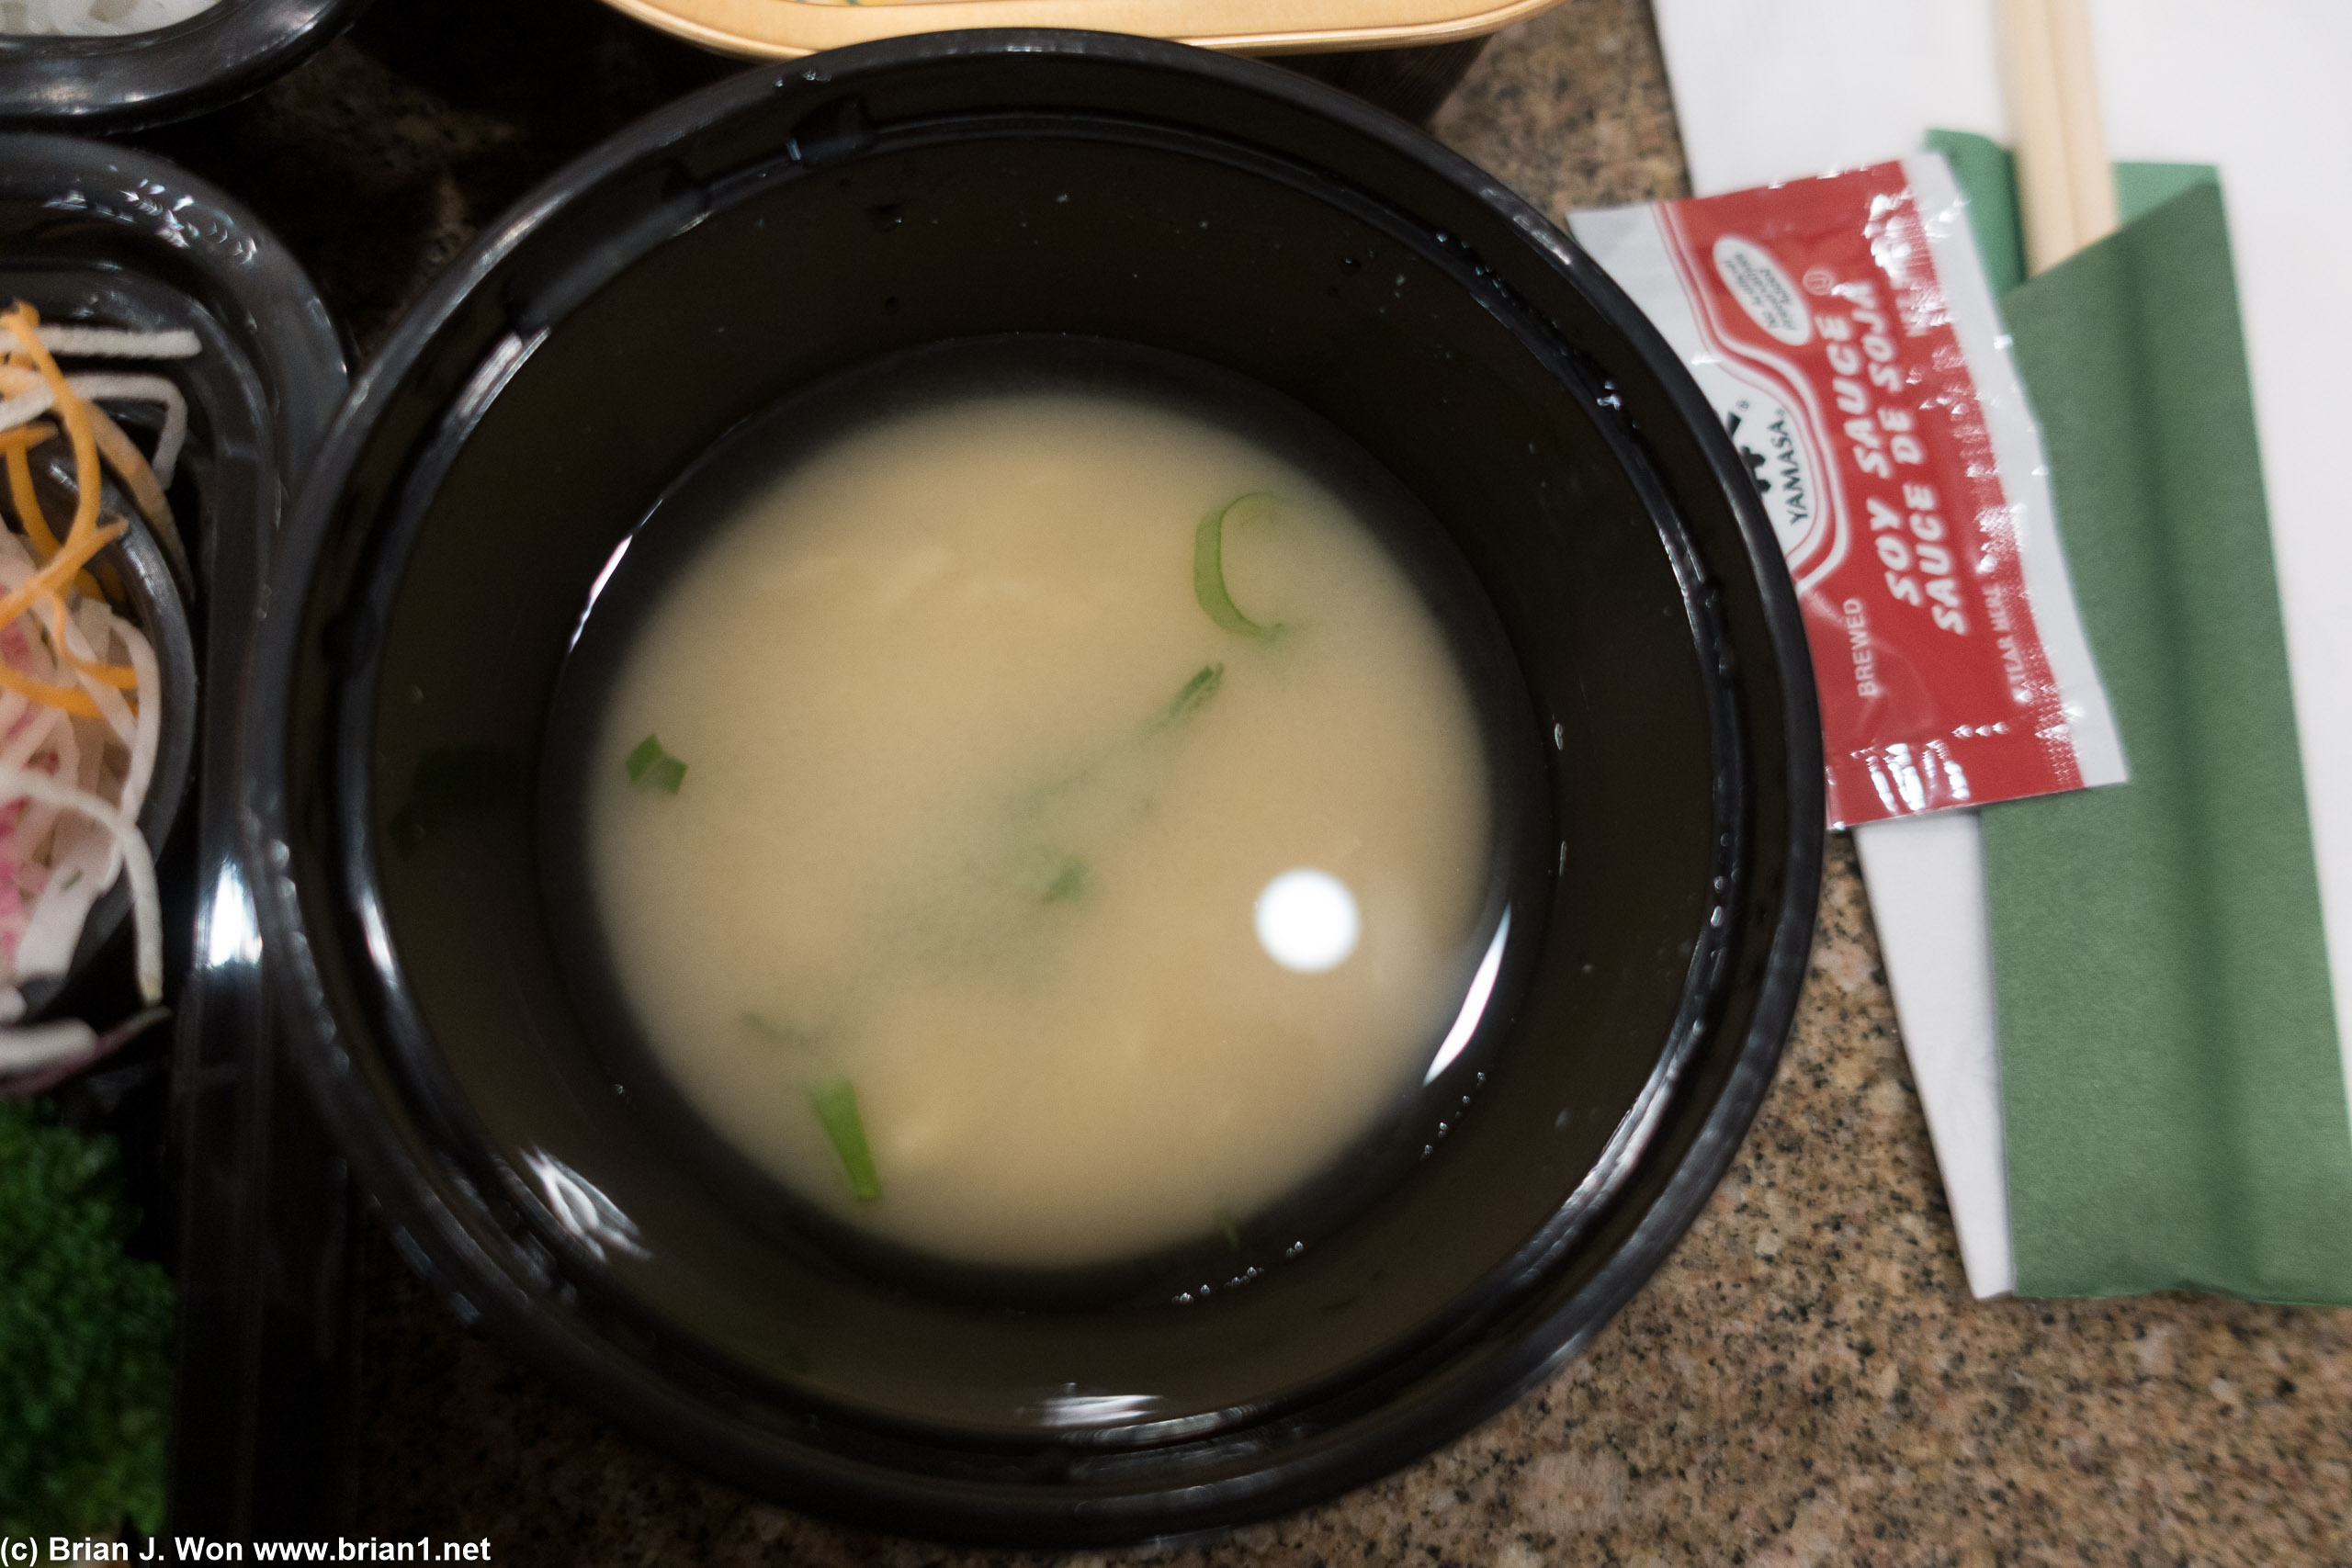 Tamago toji miso soup.